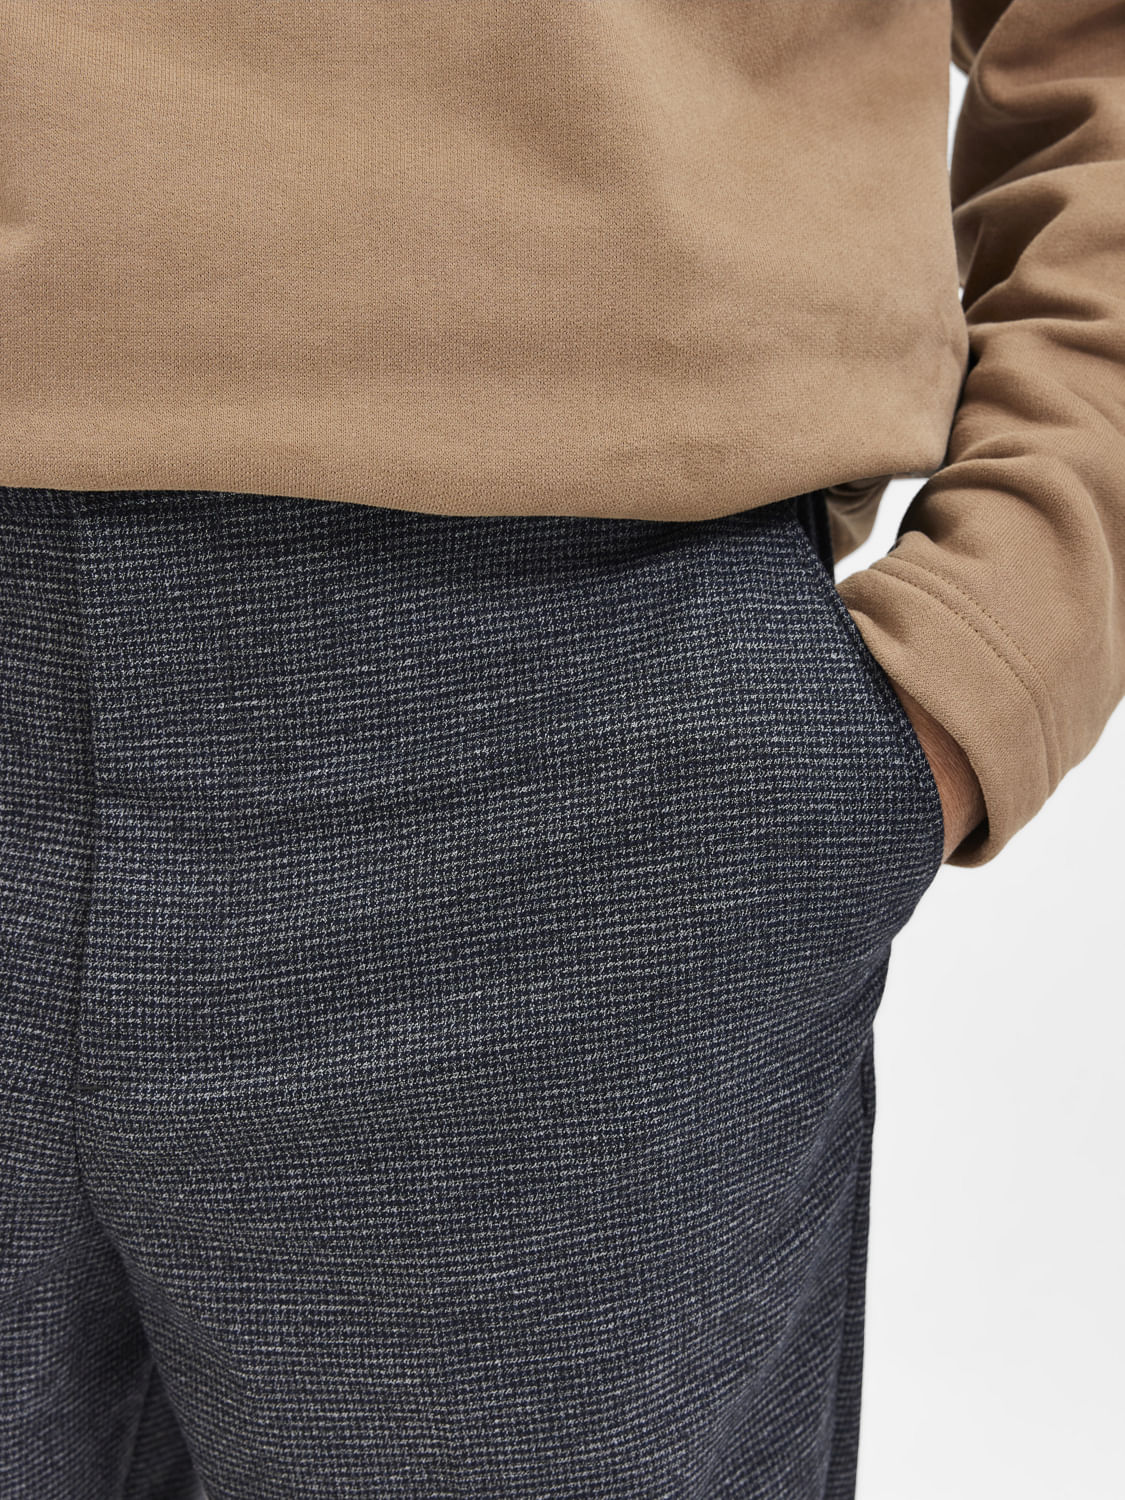 Reiss Newbury Slim Fit Checked Trousers | REISS USA